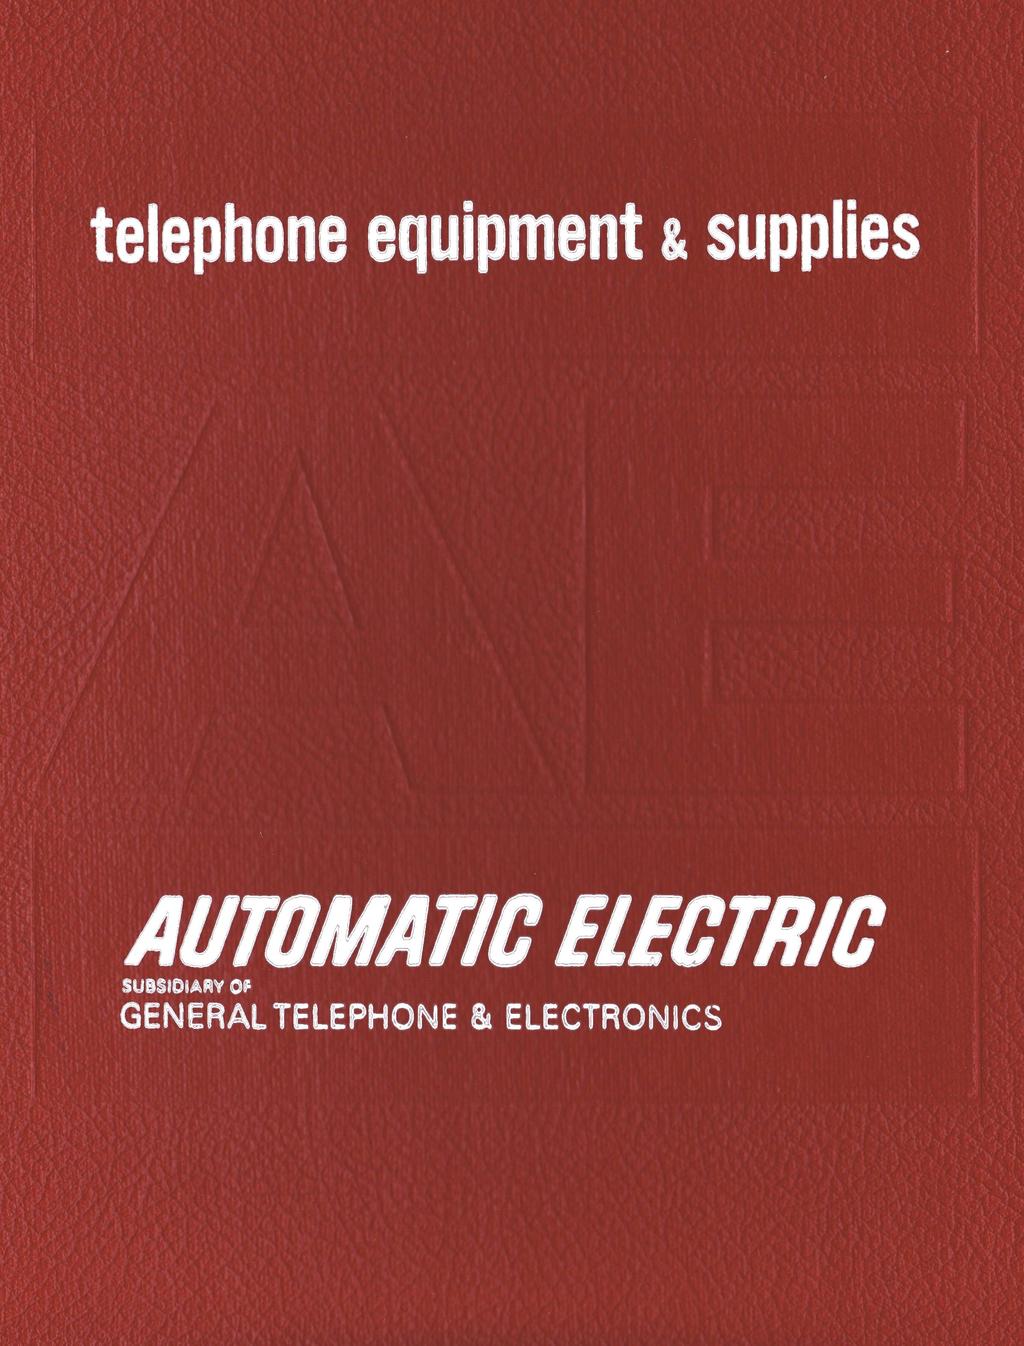 telephone equipment & supplies AUTOMATIC